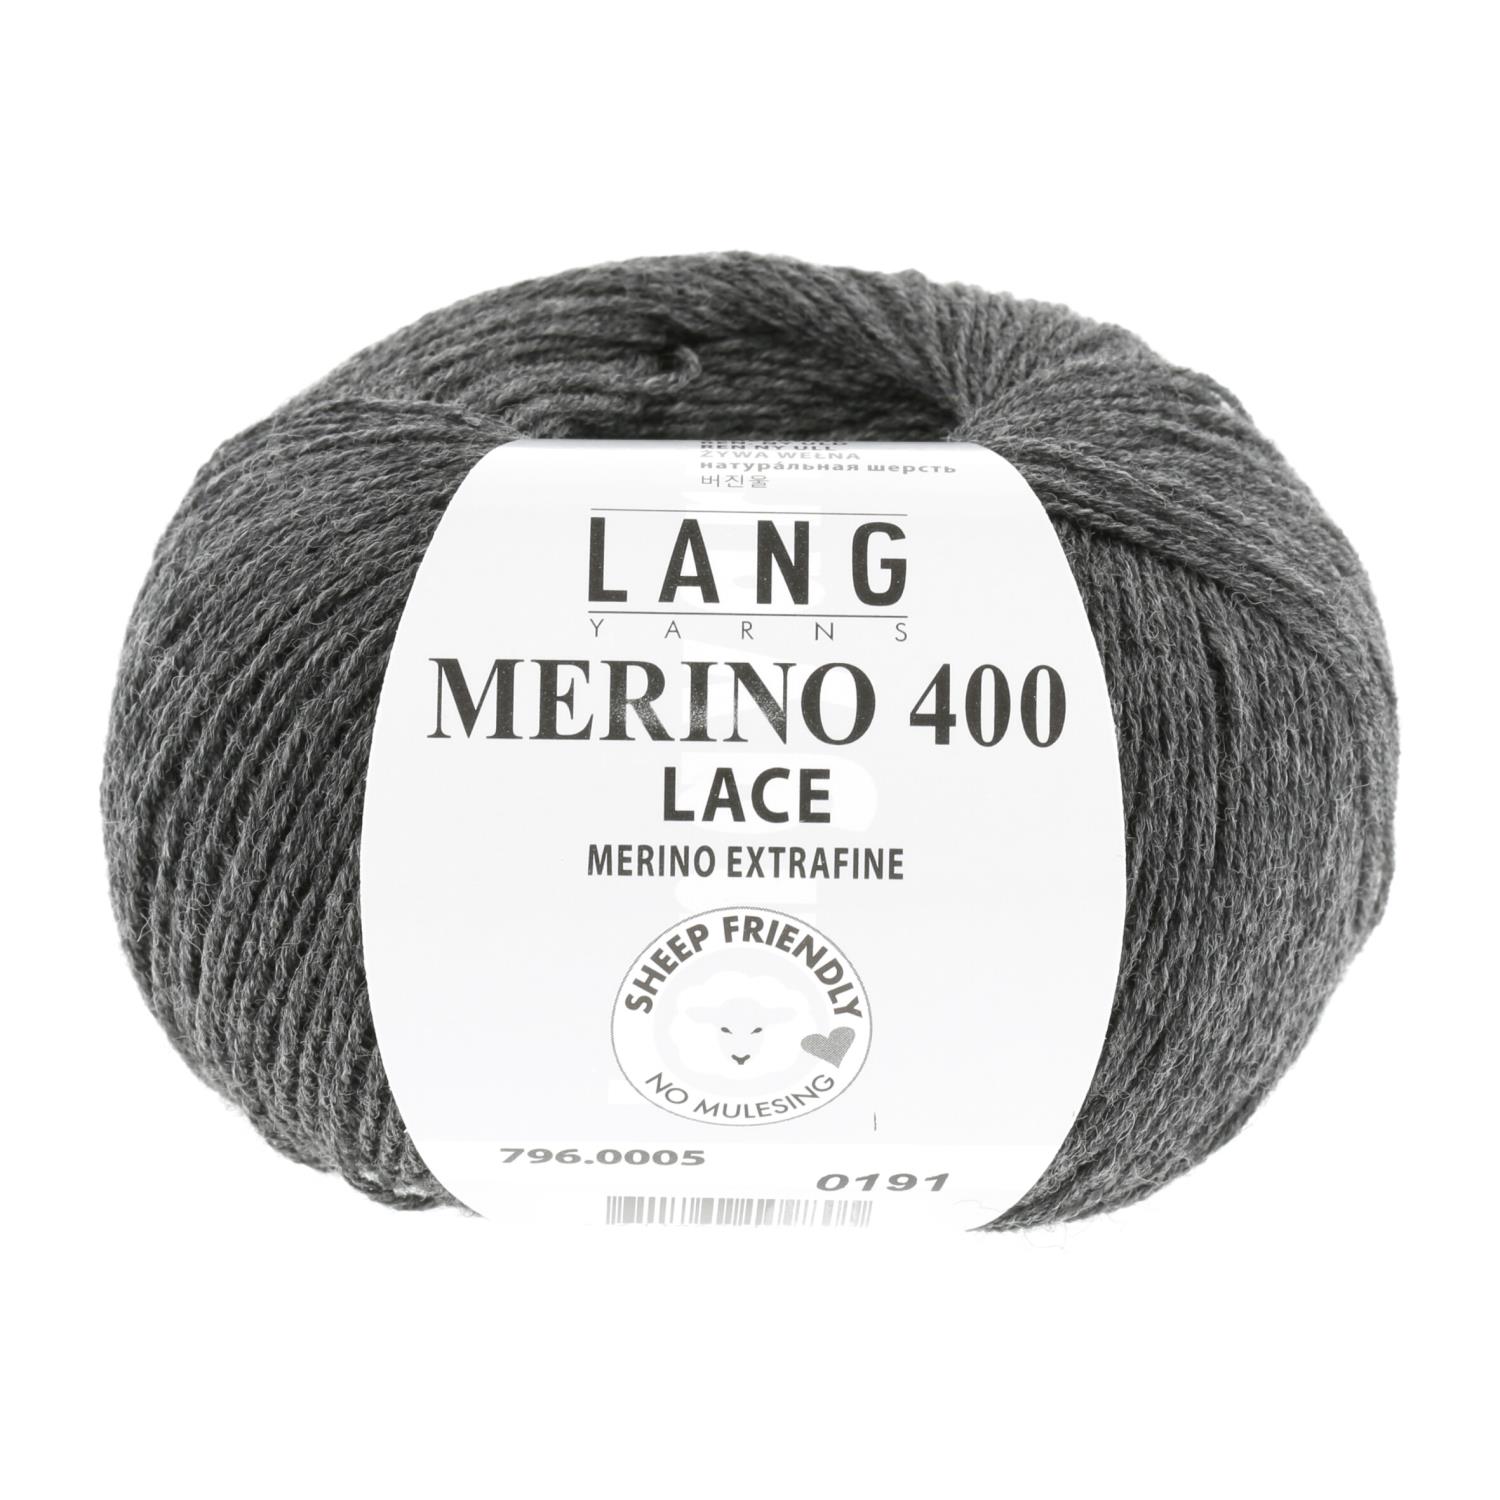 05 Merino 400 lace - dark grey mélange